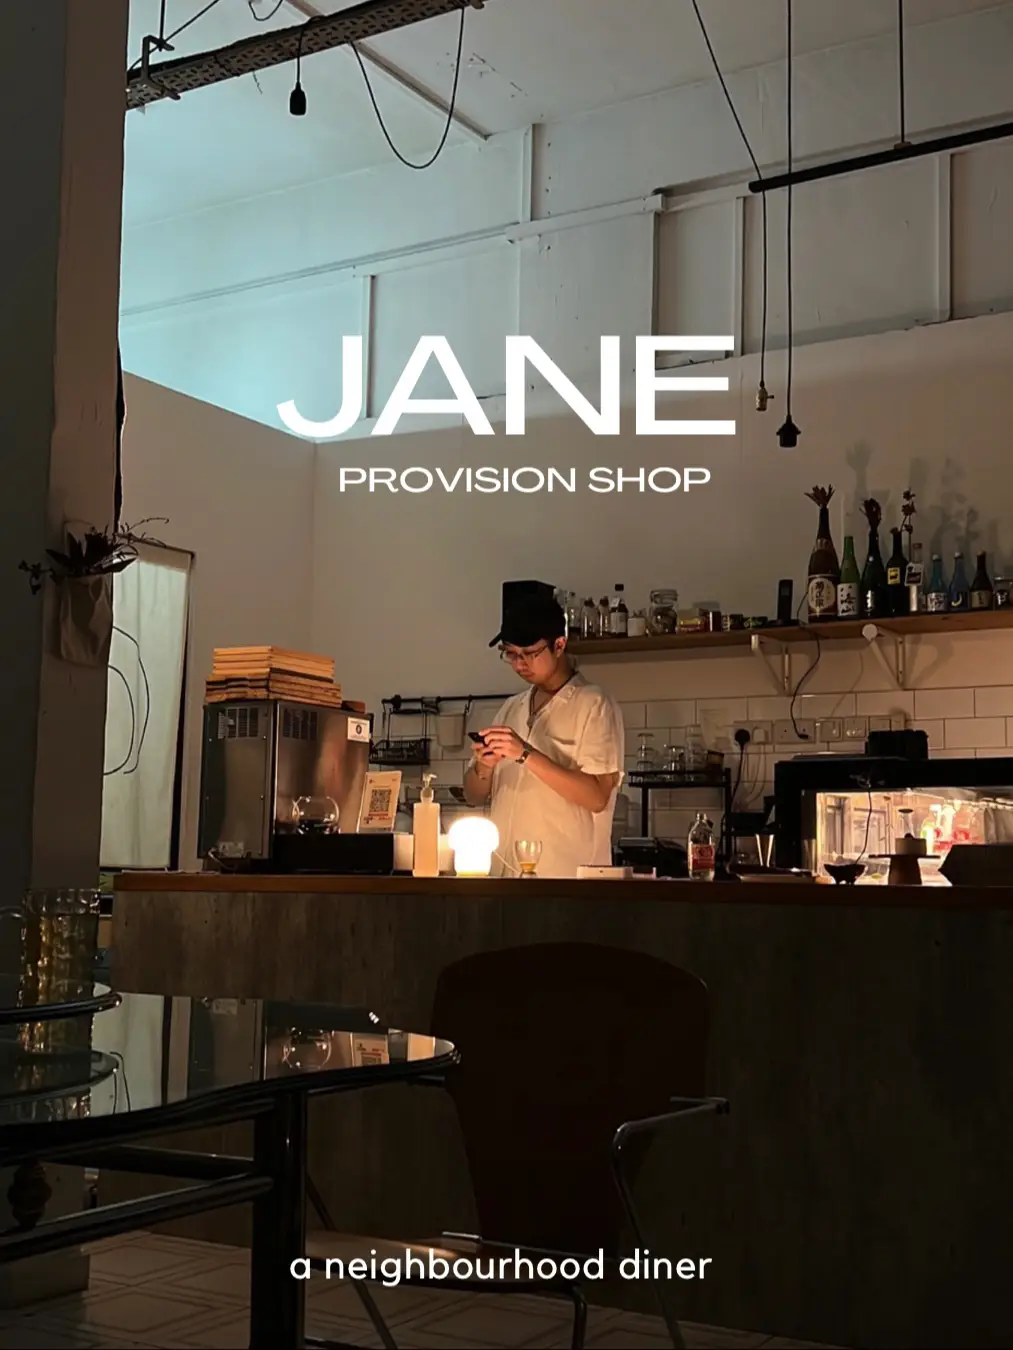 Jane Provision Shop / Neighbourhood Diner 's images